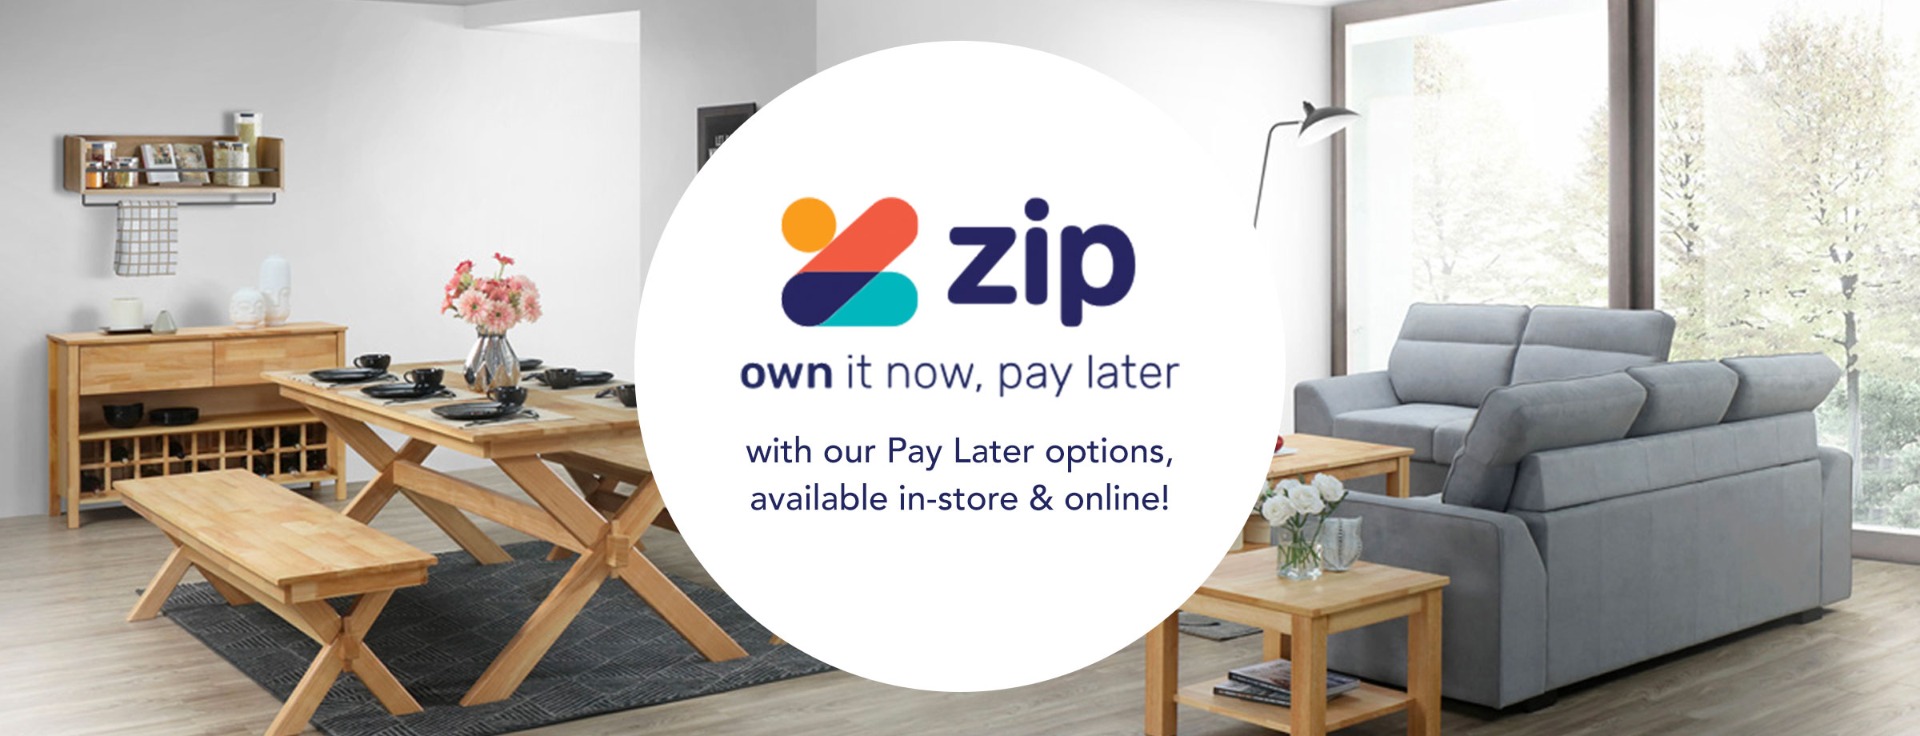 Zip Payment Overview